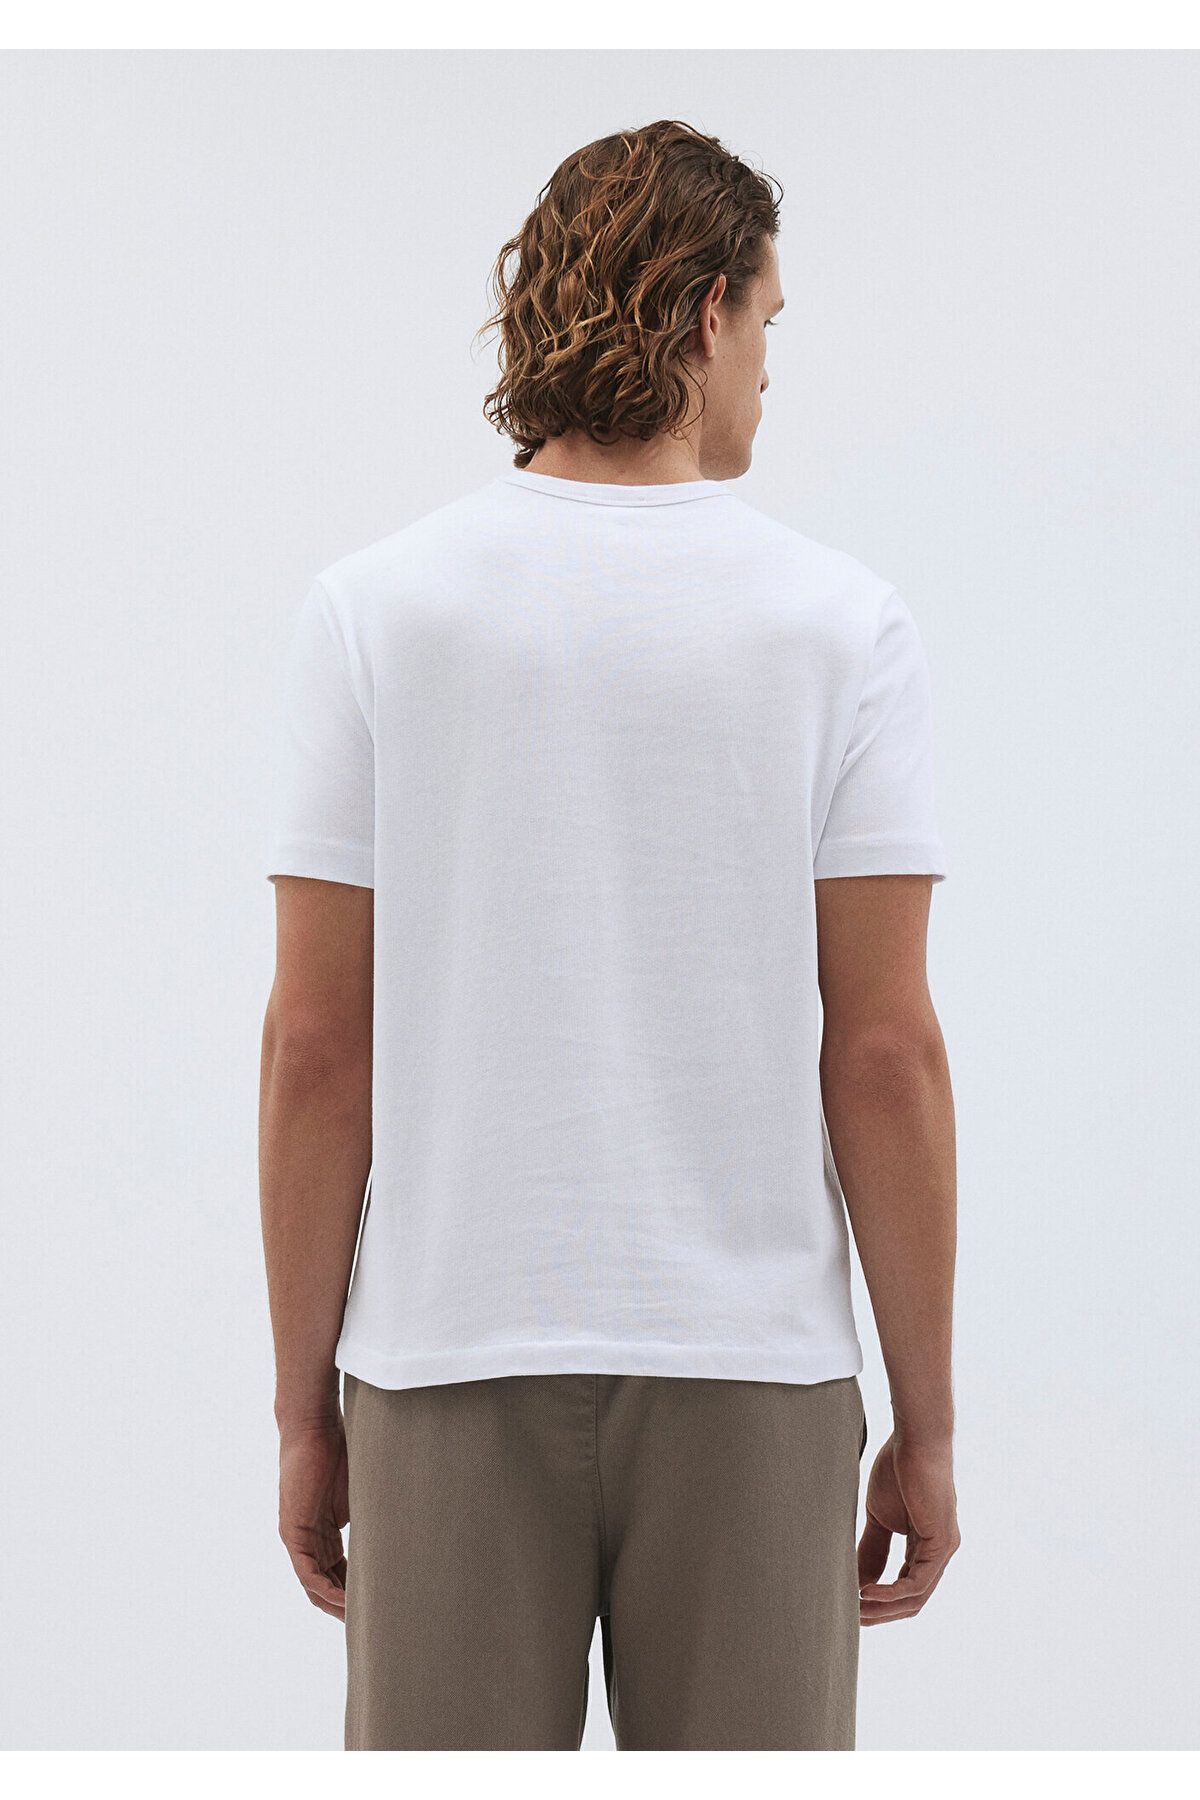 Mavi تی شرت پایه اولیه White Premium مناسب / کلاس عادی 06111903-620